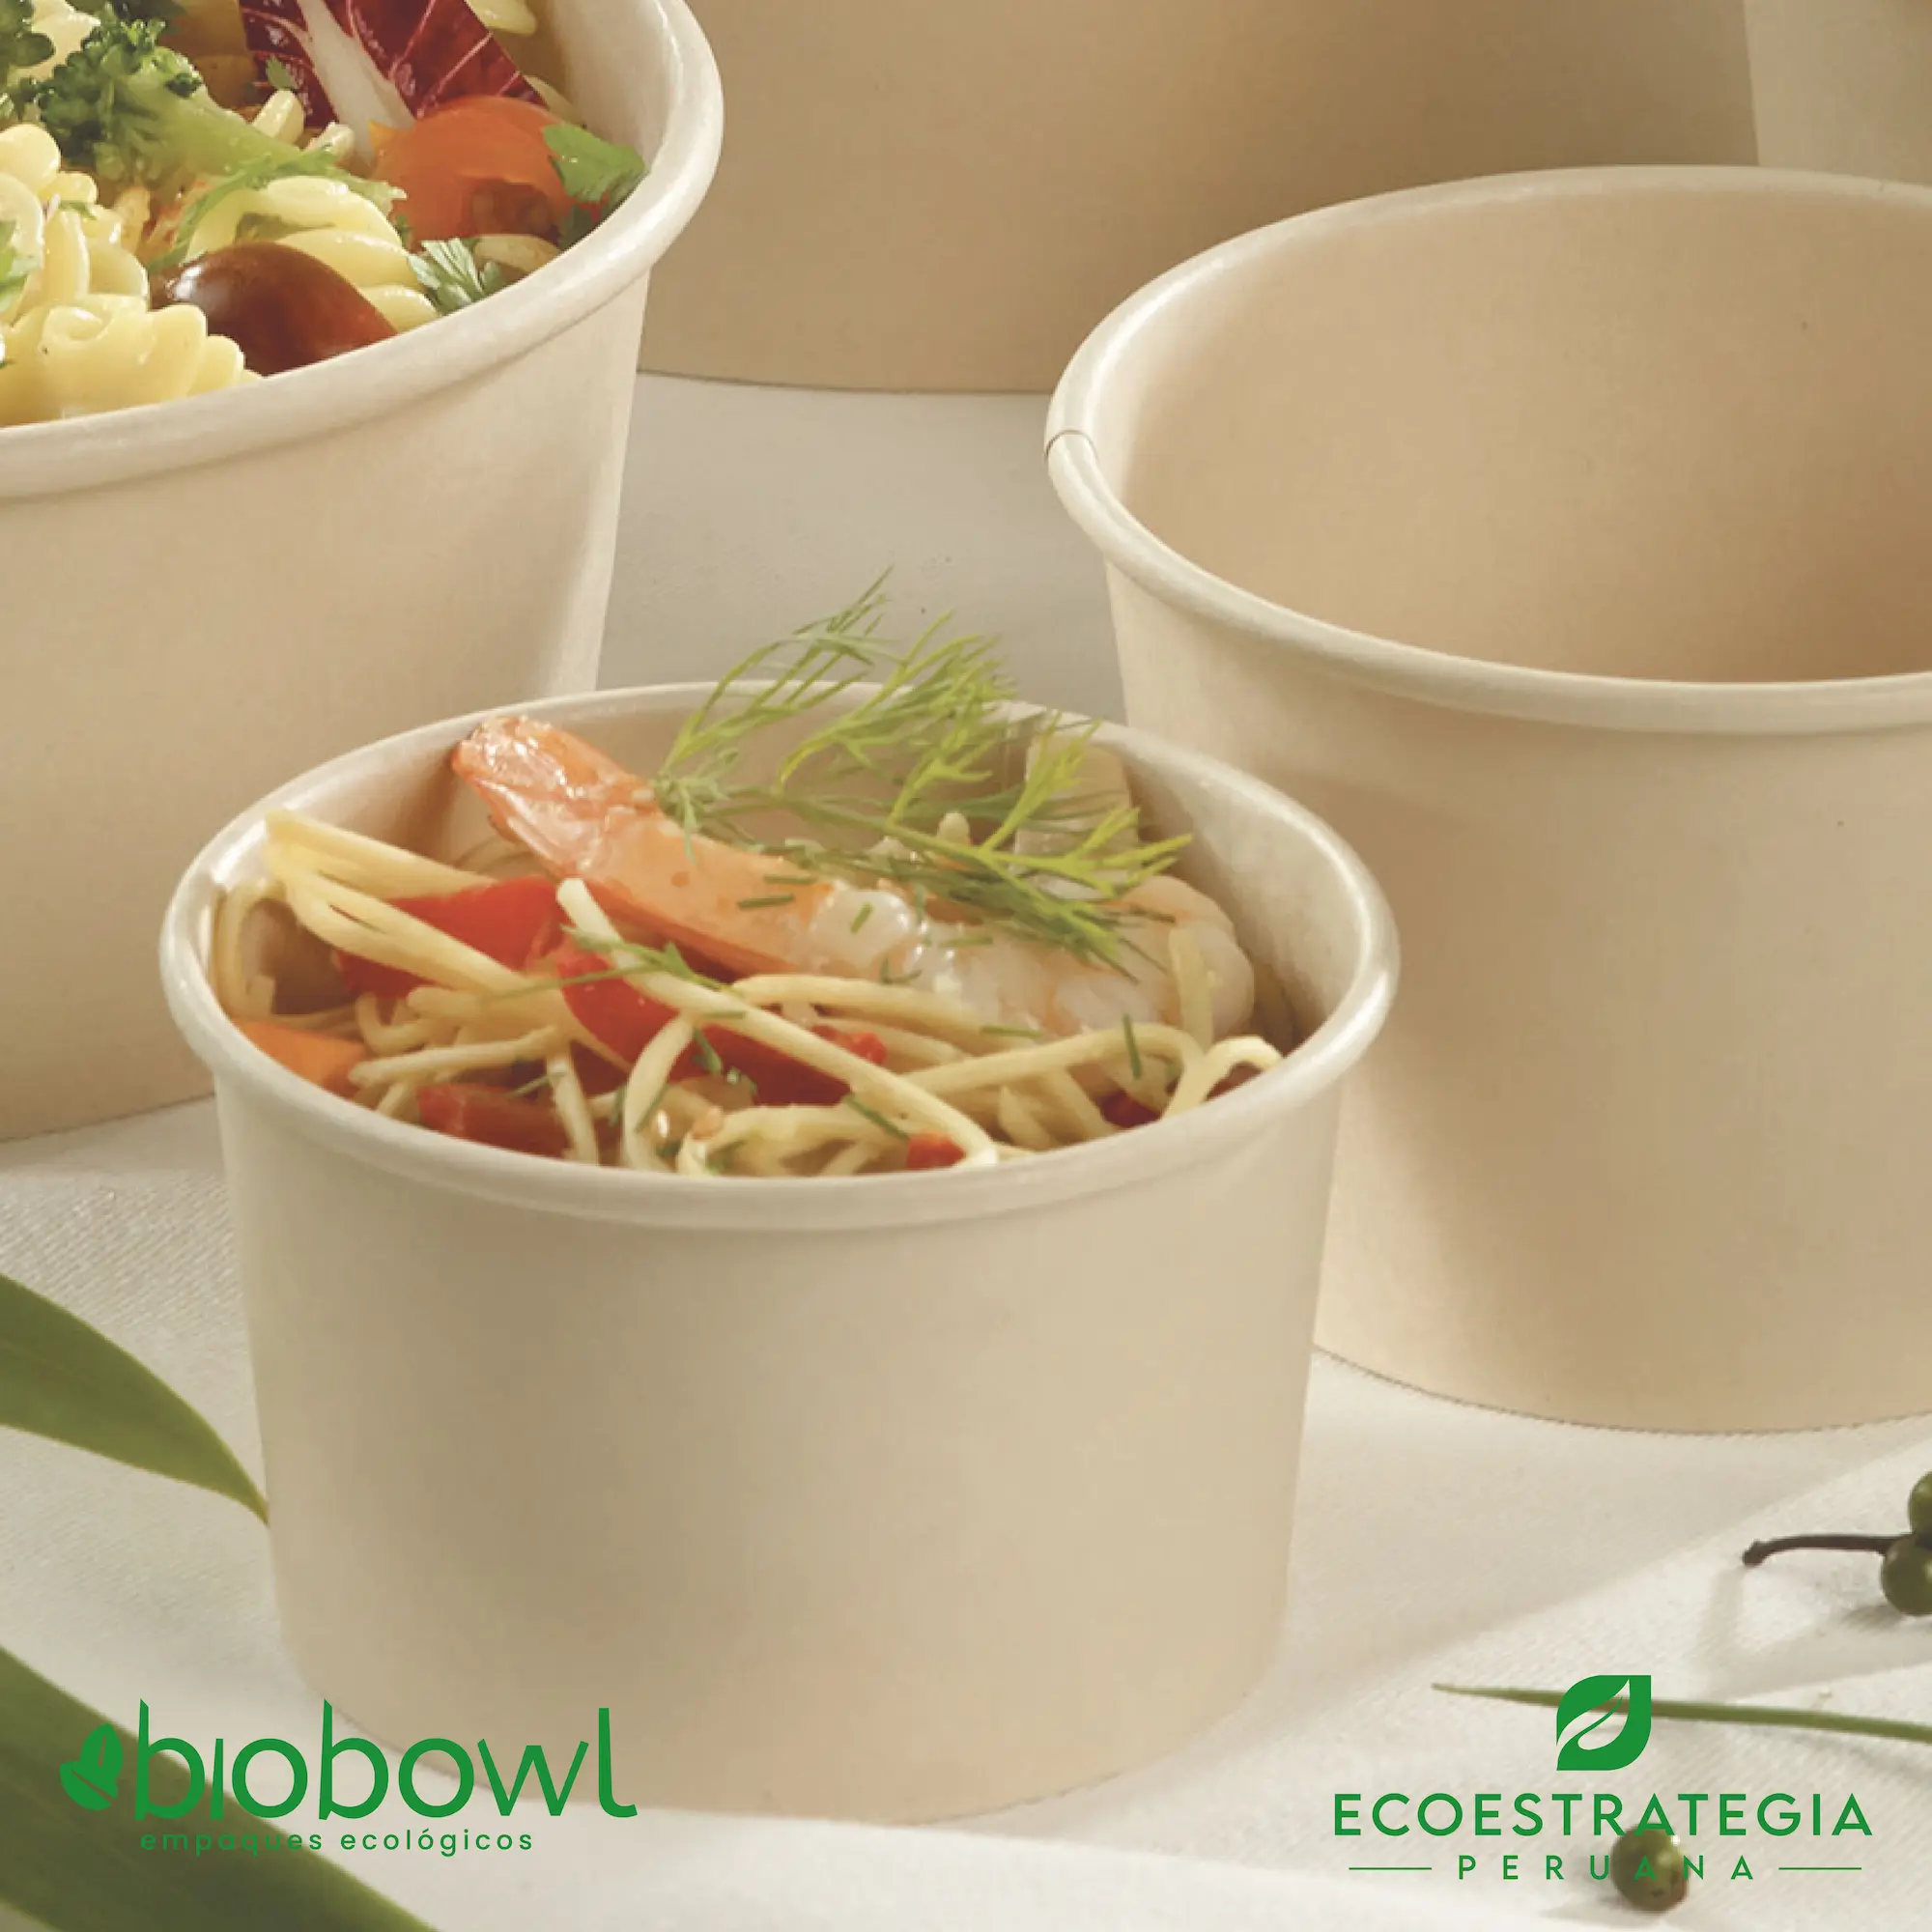 Esta bowl biodegradable de 330 ml es a base de fibra de bambu. Envases descartables con gramaje ideal, cotiza tus empaques, platos y tapers para ensaladas